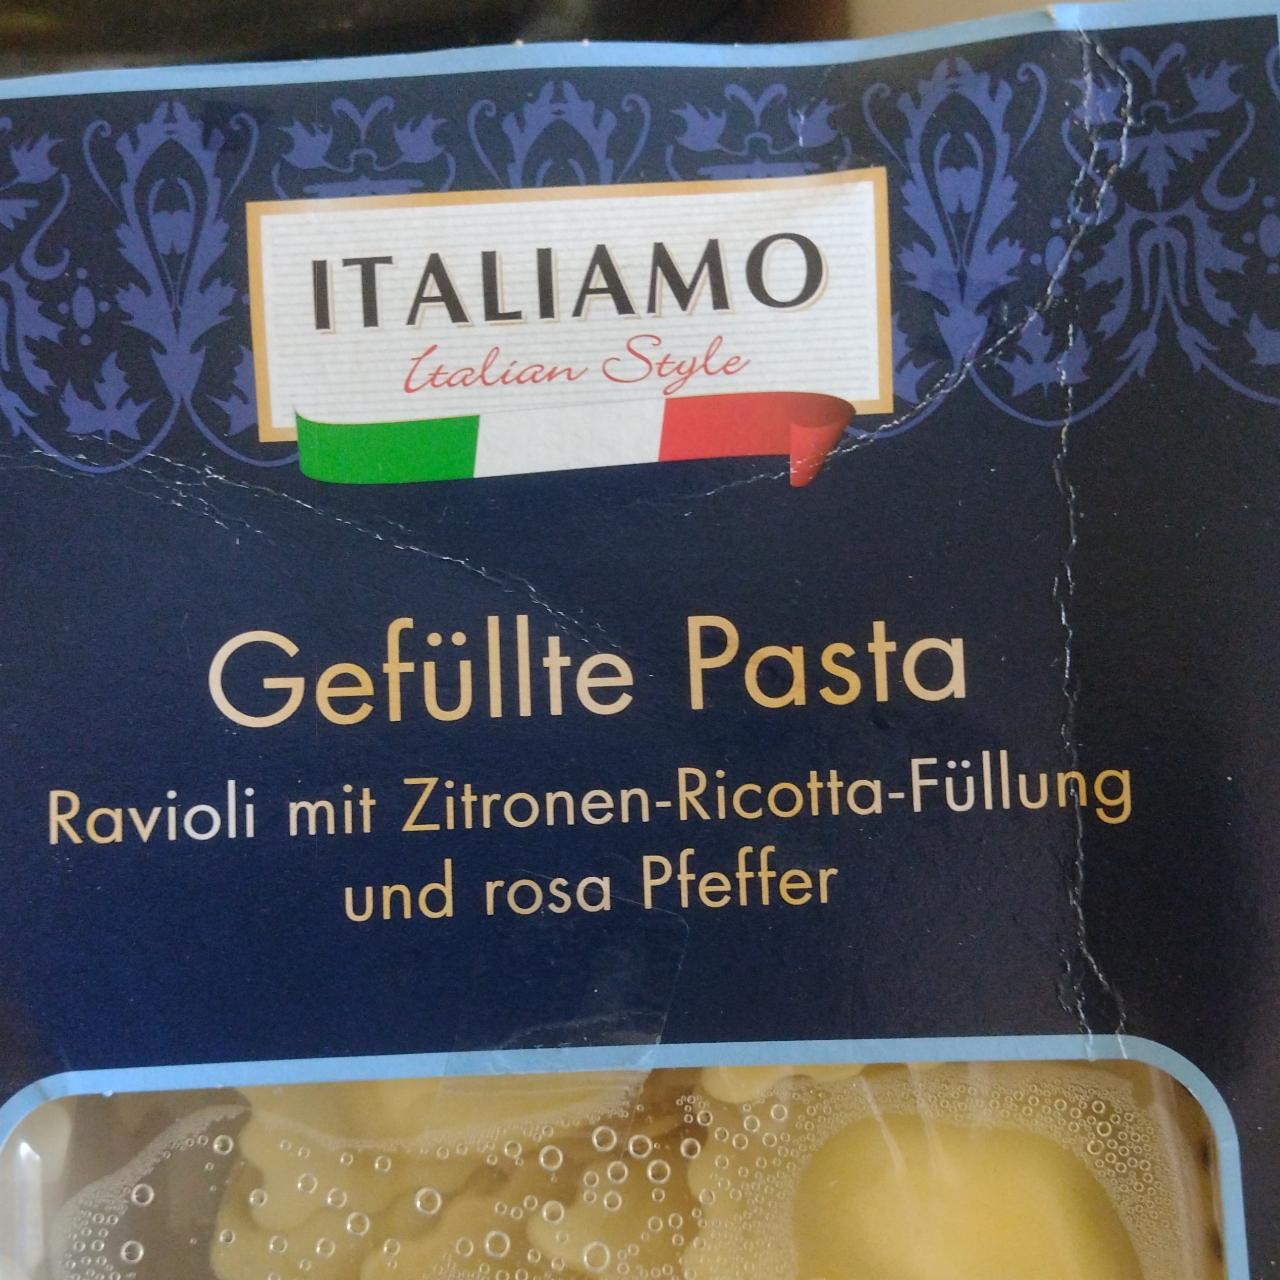 Gefüllte Pasta Ravioli mit Zitronen-Ricotta-Füllung kalorie, a kJ rosa Pfeffer - Italiamo hodnoty und nutriční